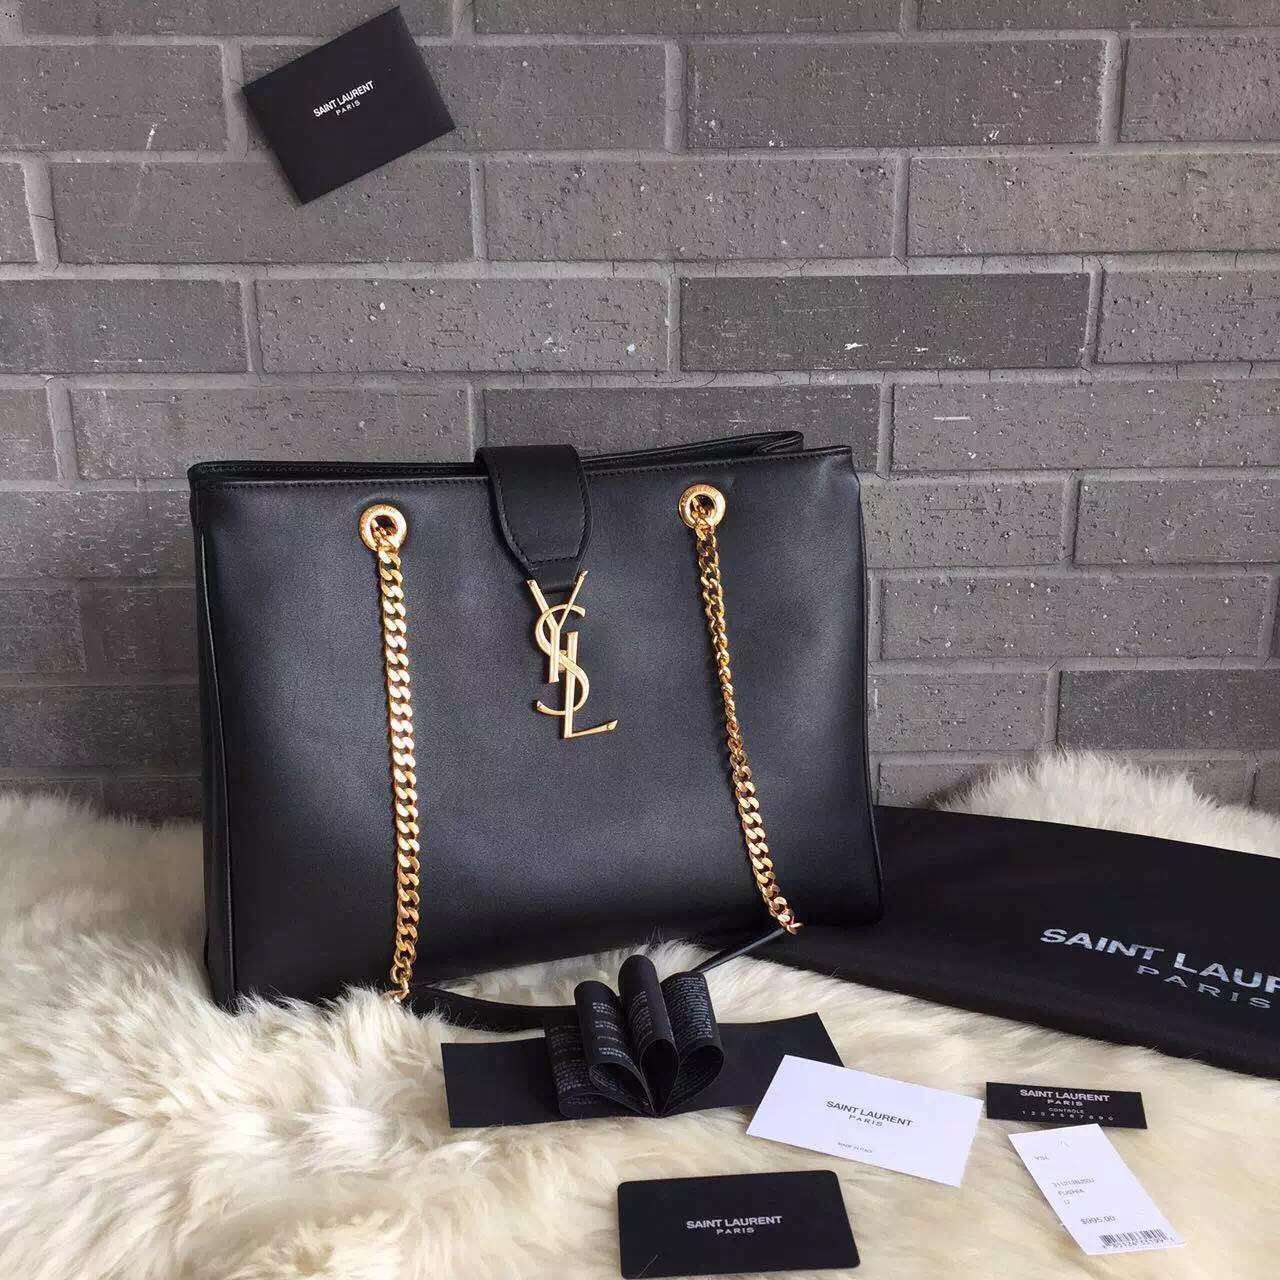 dark beige leather ysl handbag  